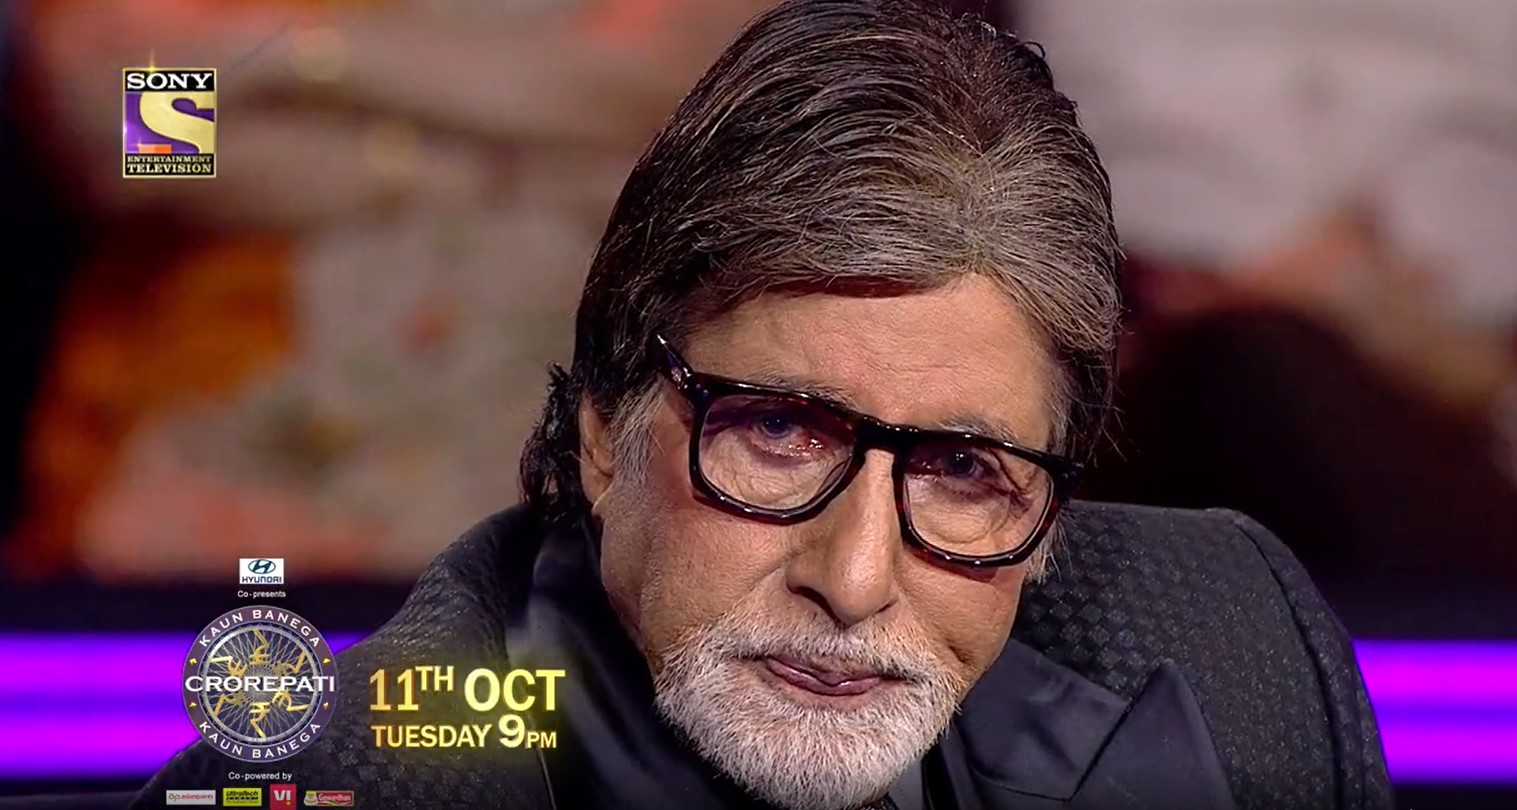 Iss episode mein share karenge Sr Bachchan ji apne life ke kuch keemti pal